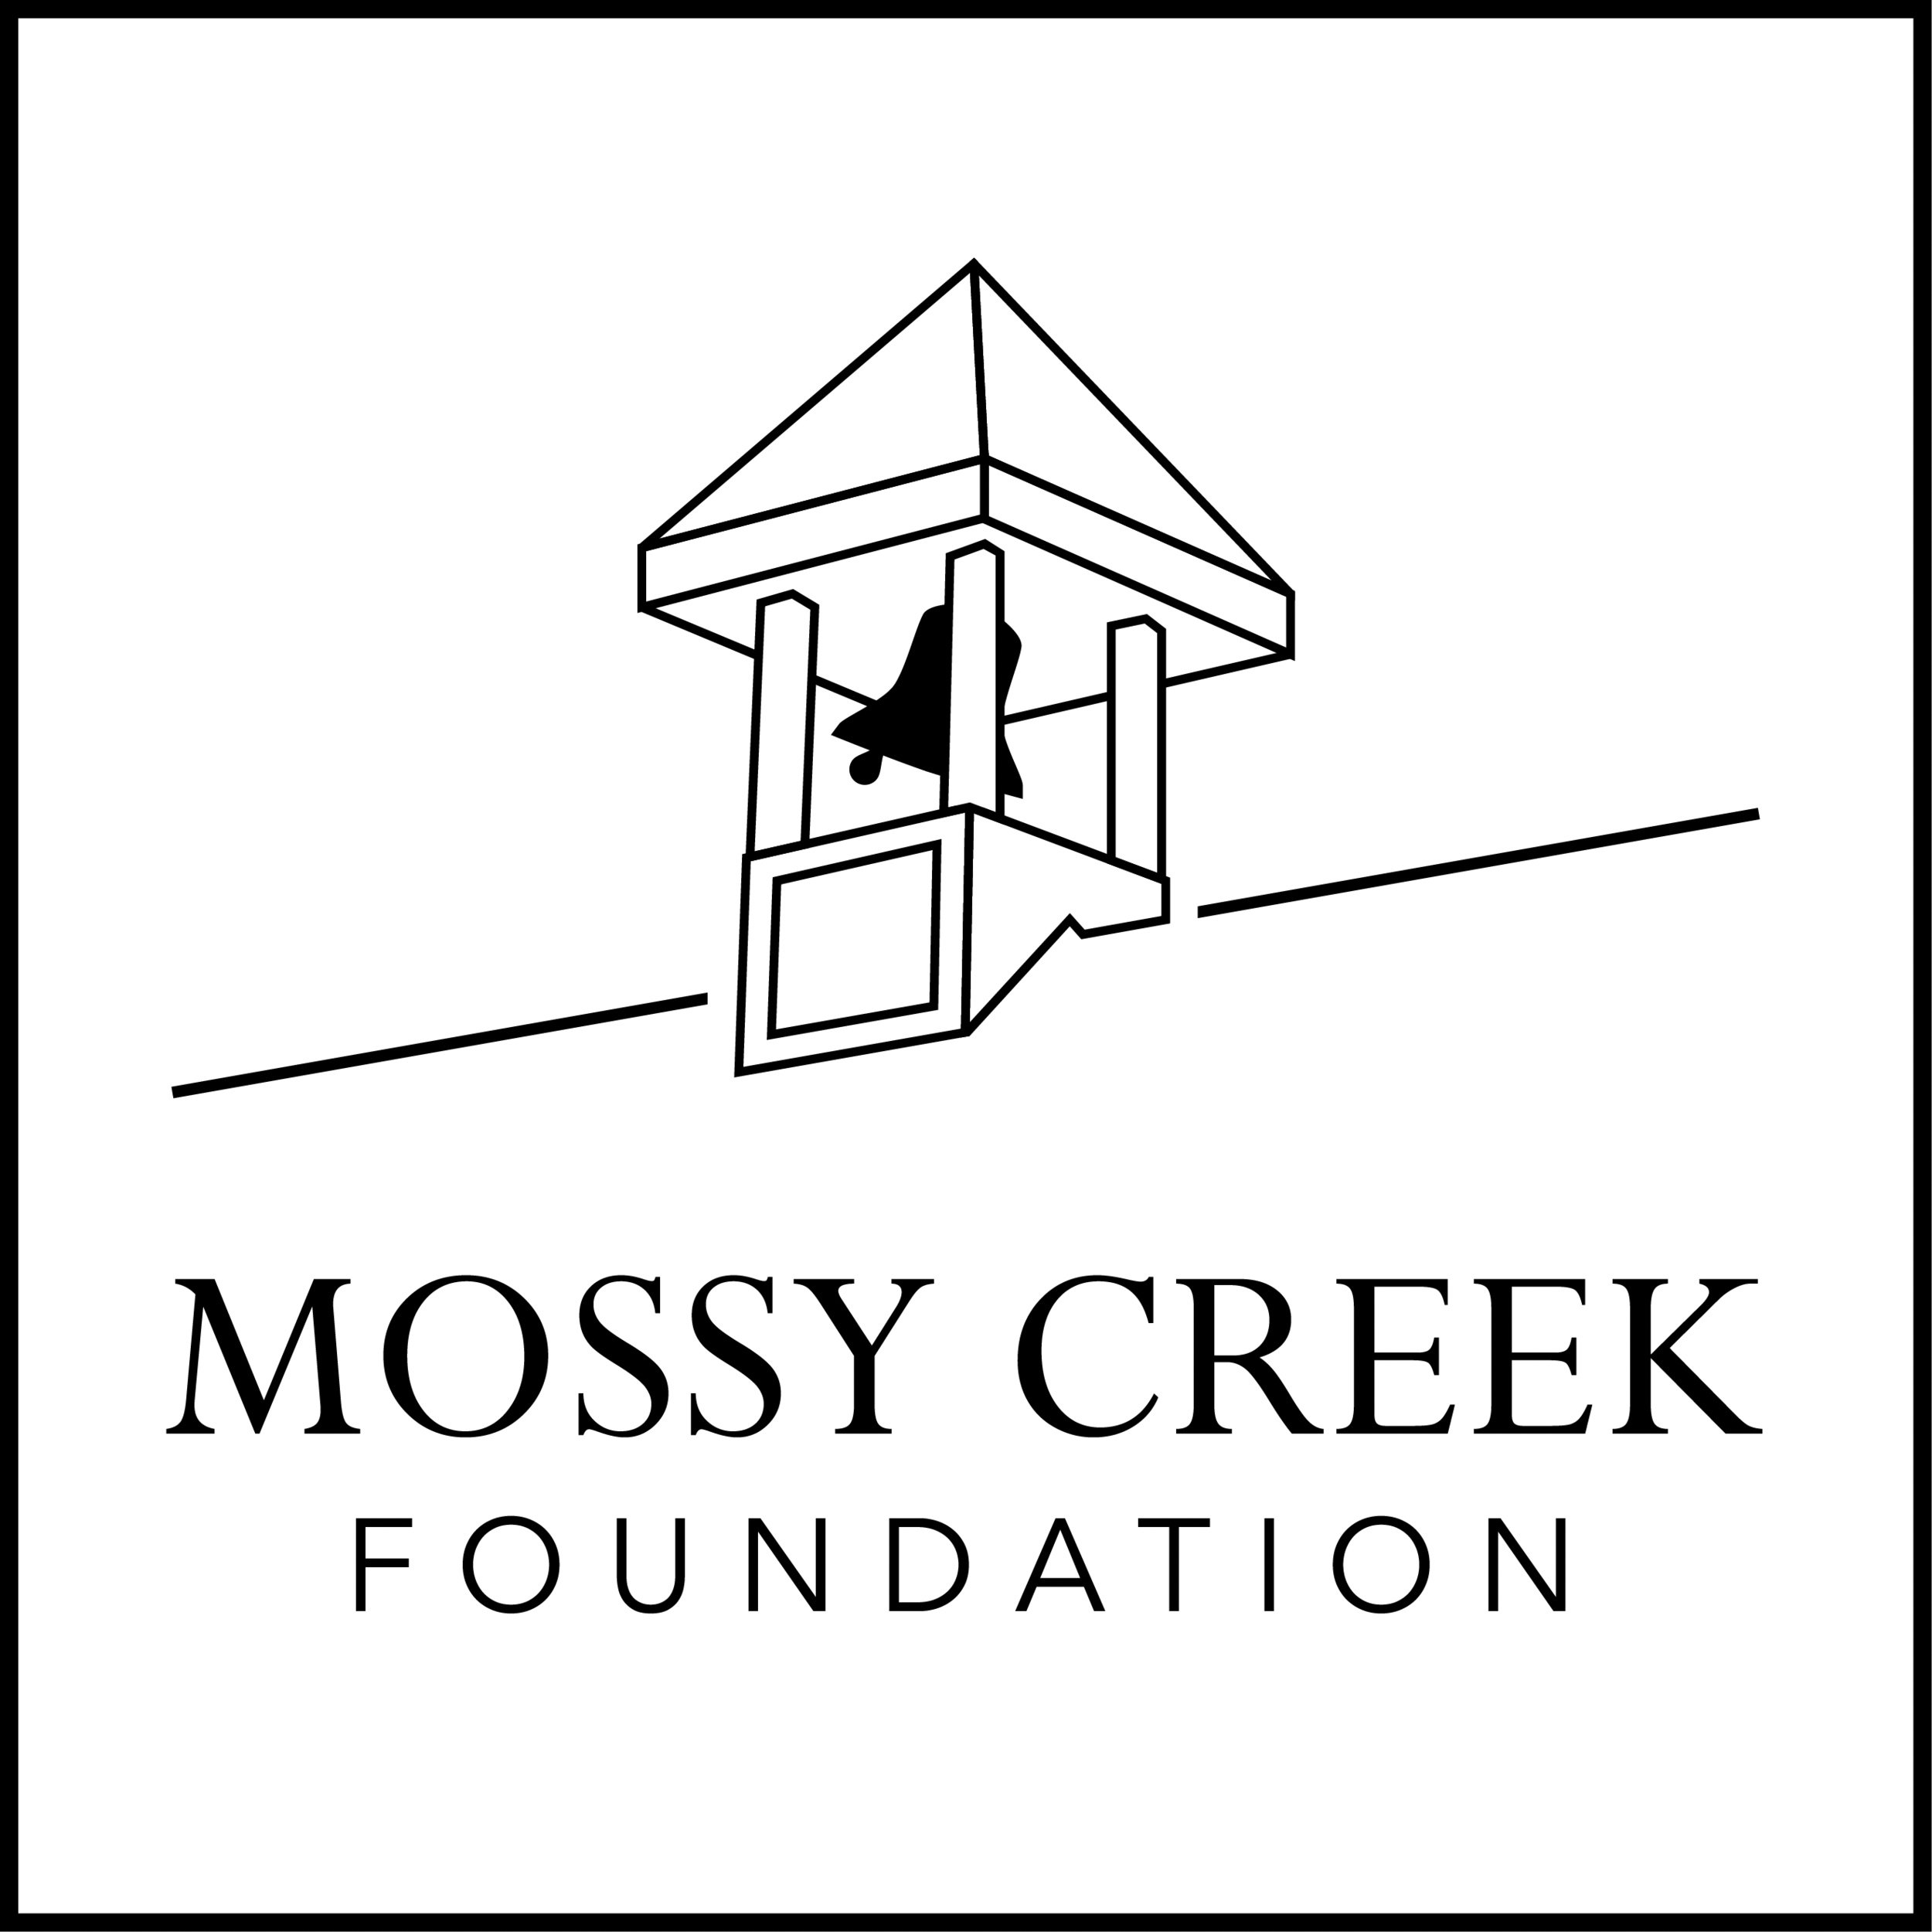 Mossy Creek Foundation